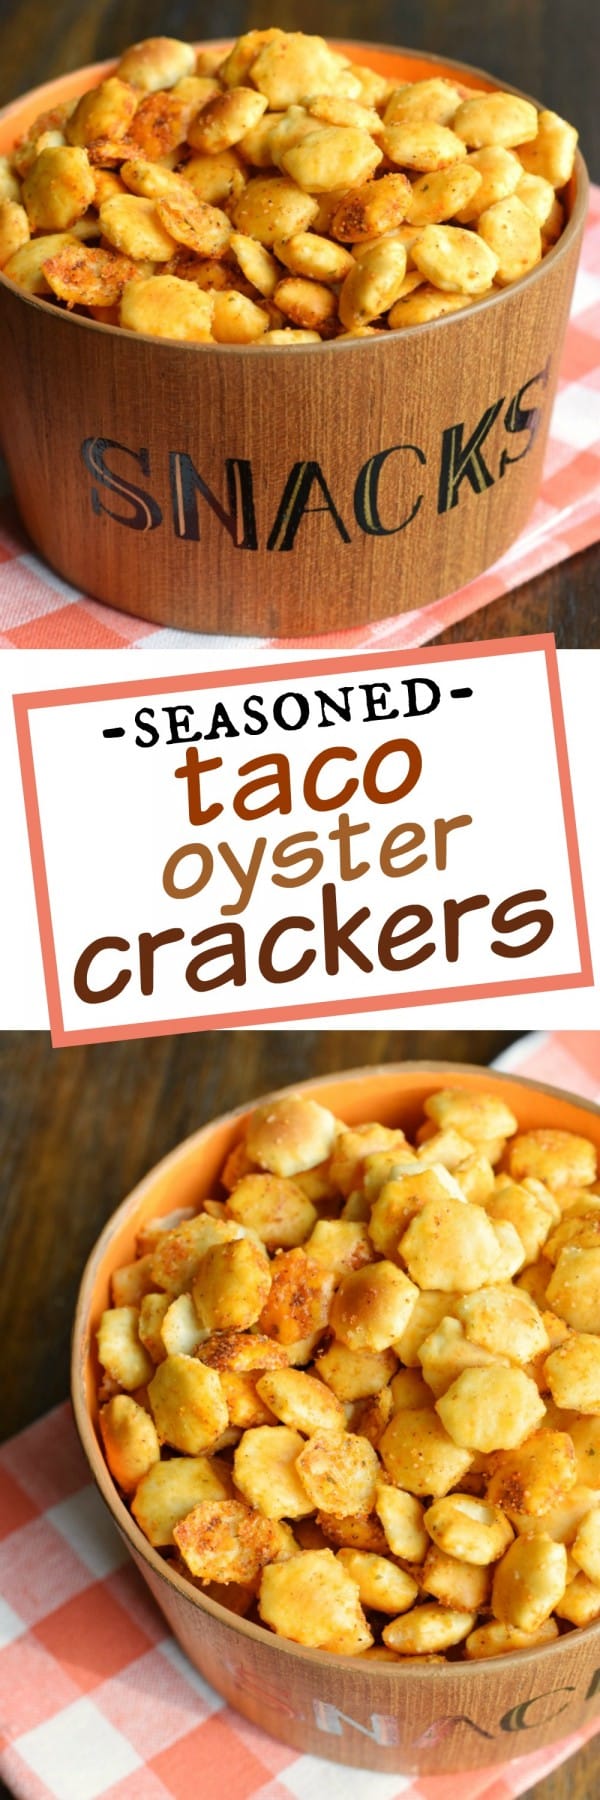 seasoned oyster crackers recipe no bake